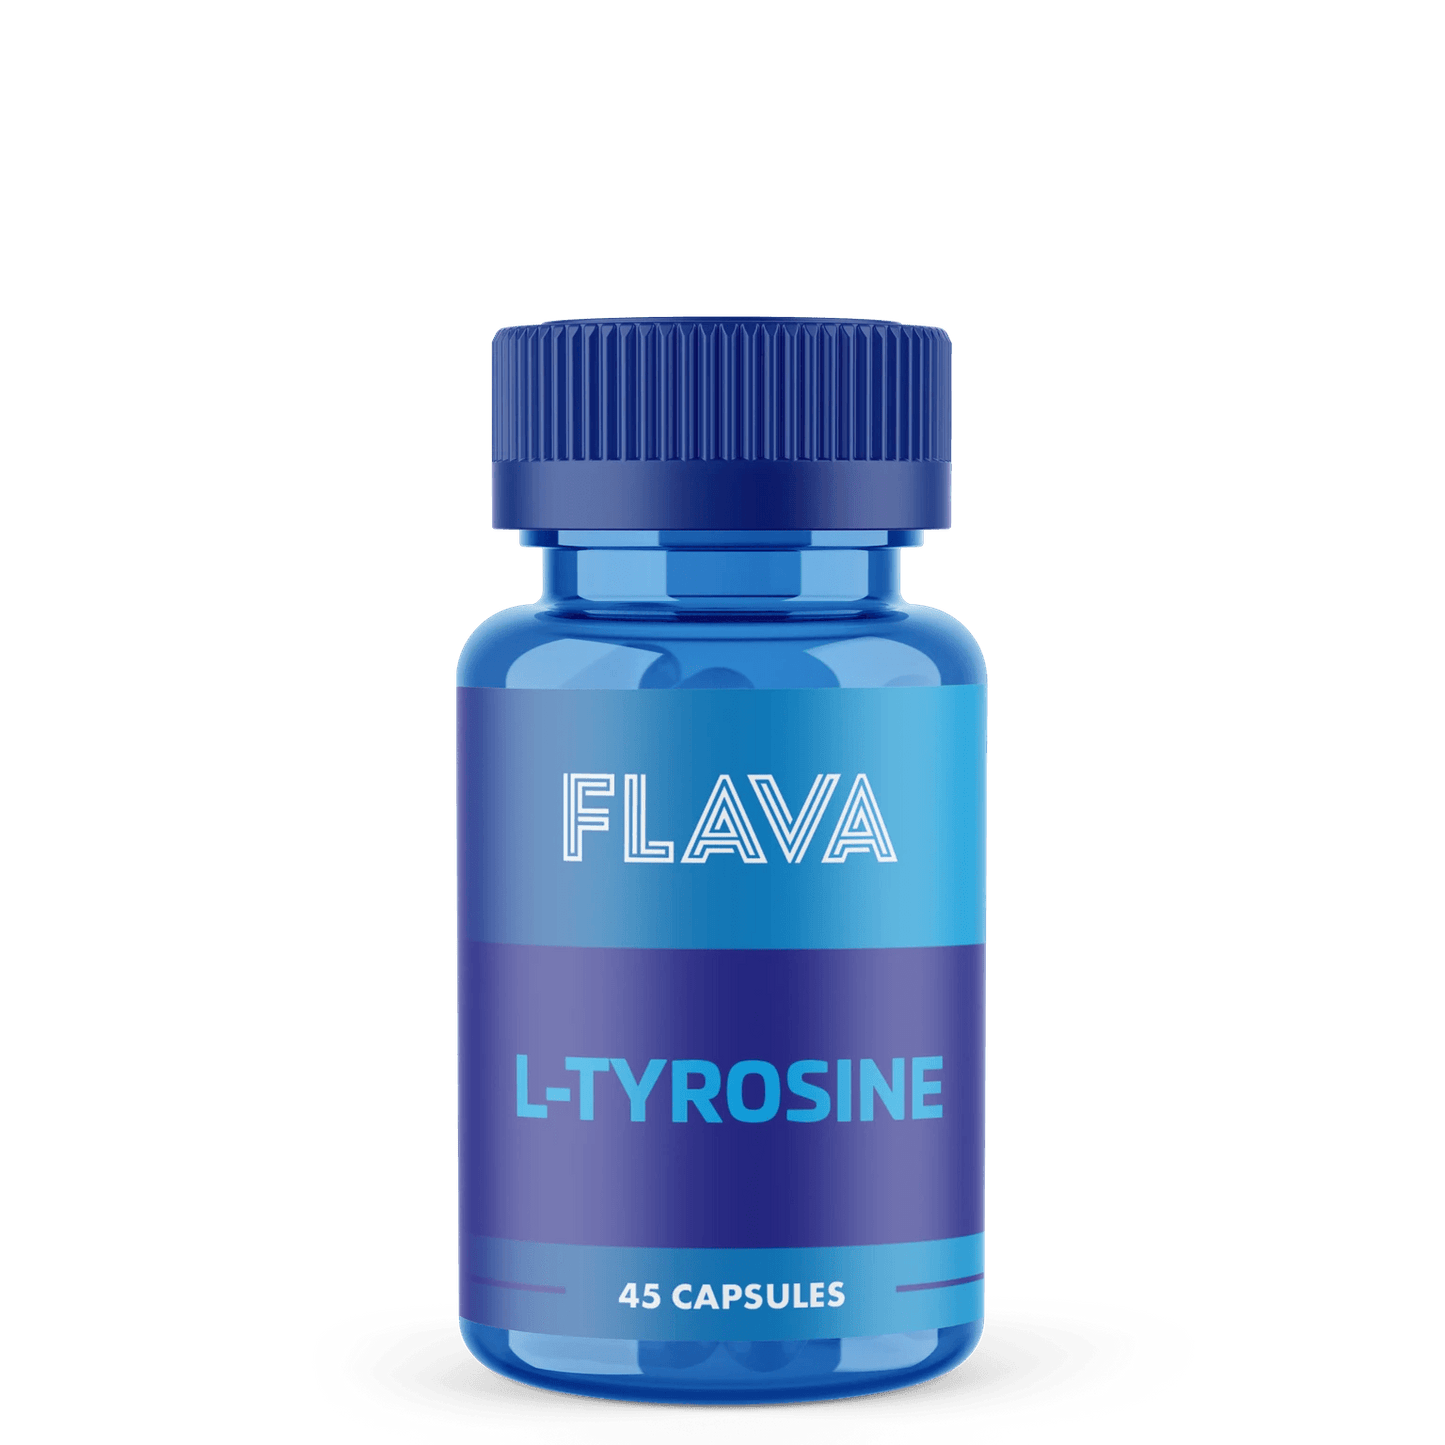 L TYROSINE - The Supplements Factory